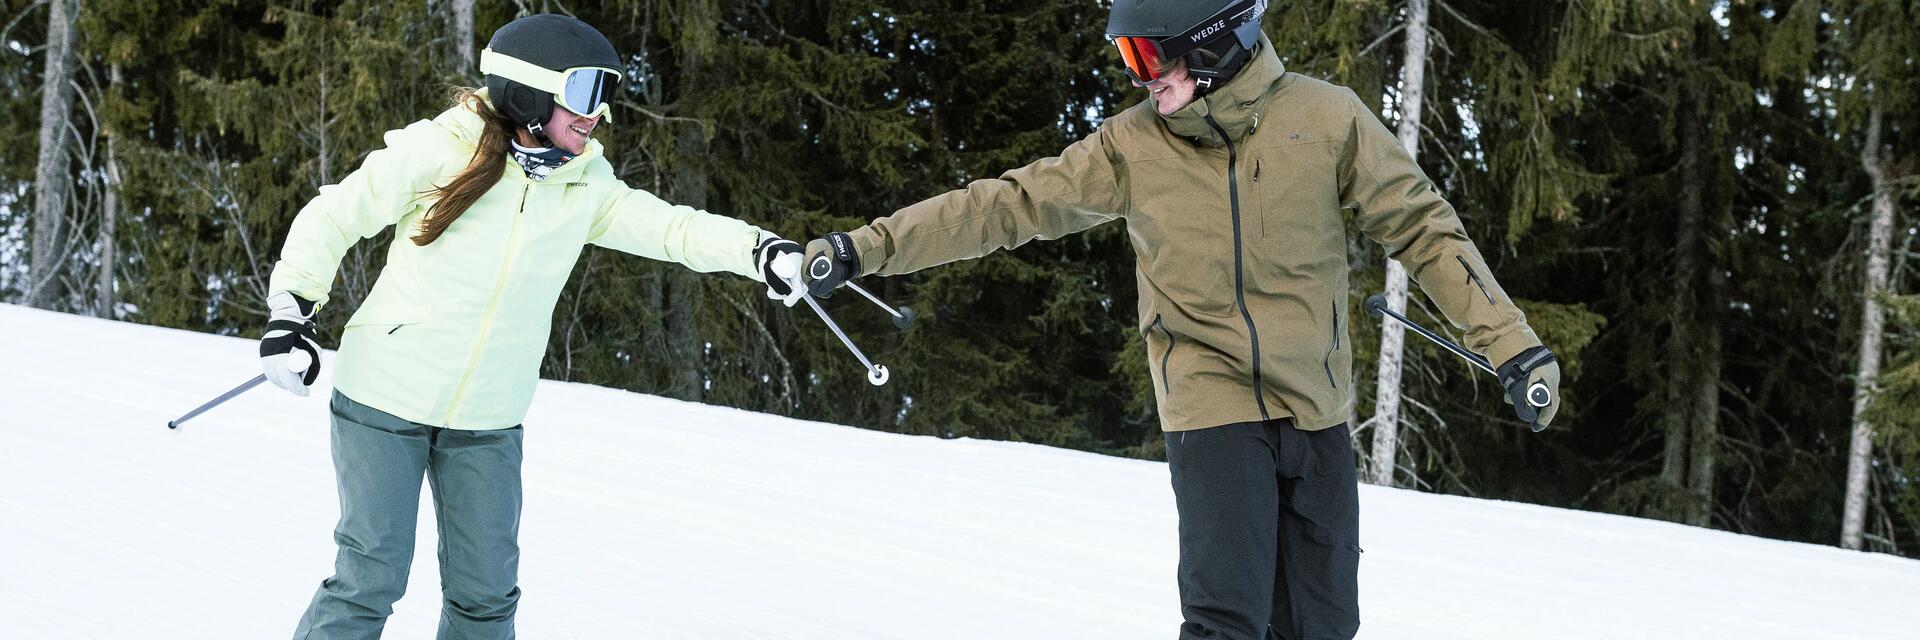 Comment porter ses skis ? Nos astuces !